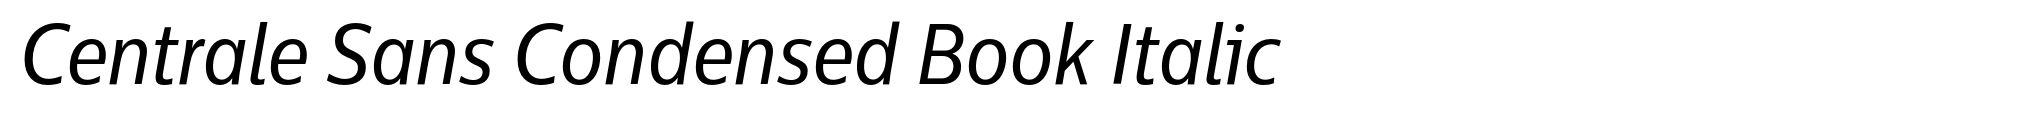 Centrale Sans Condensed Book Italic image